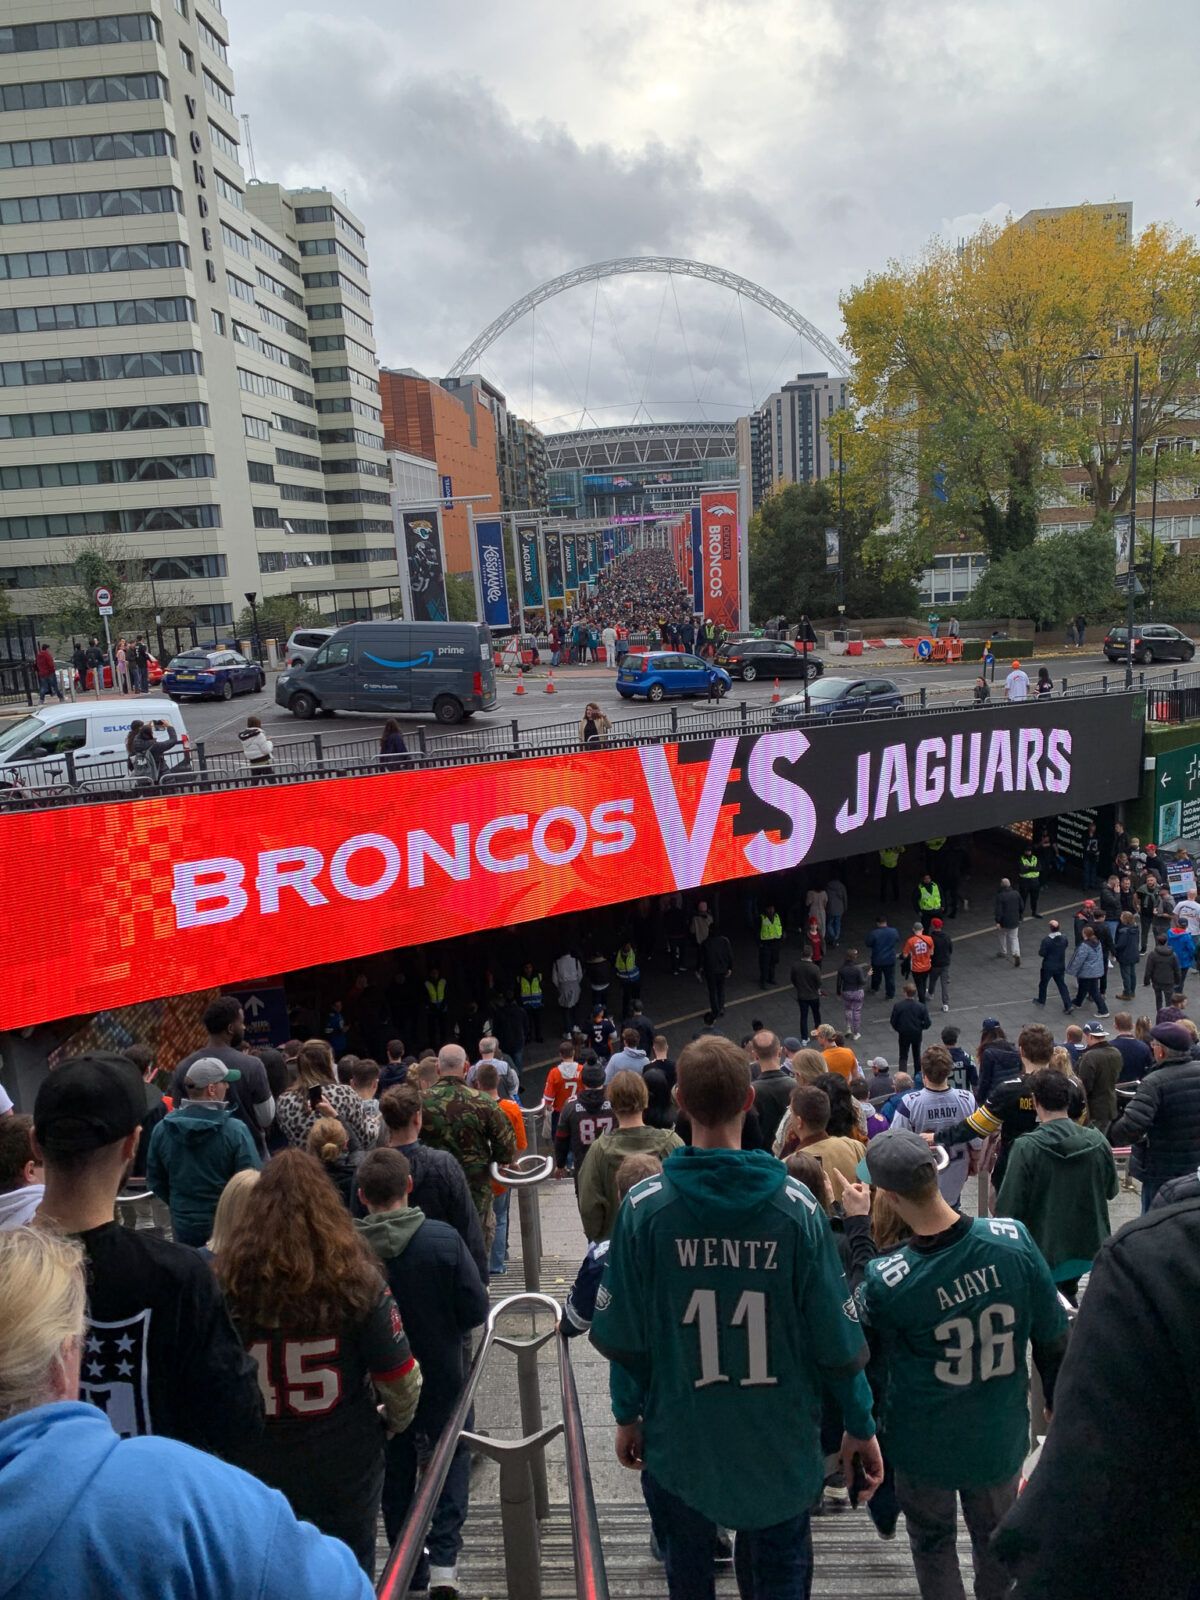 Broncos vs Jaguars – London 2022